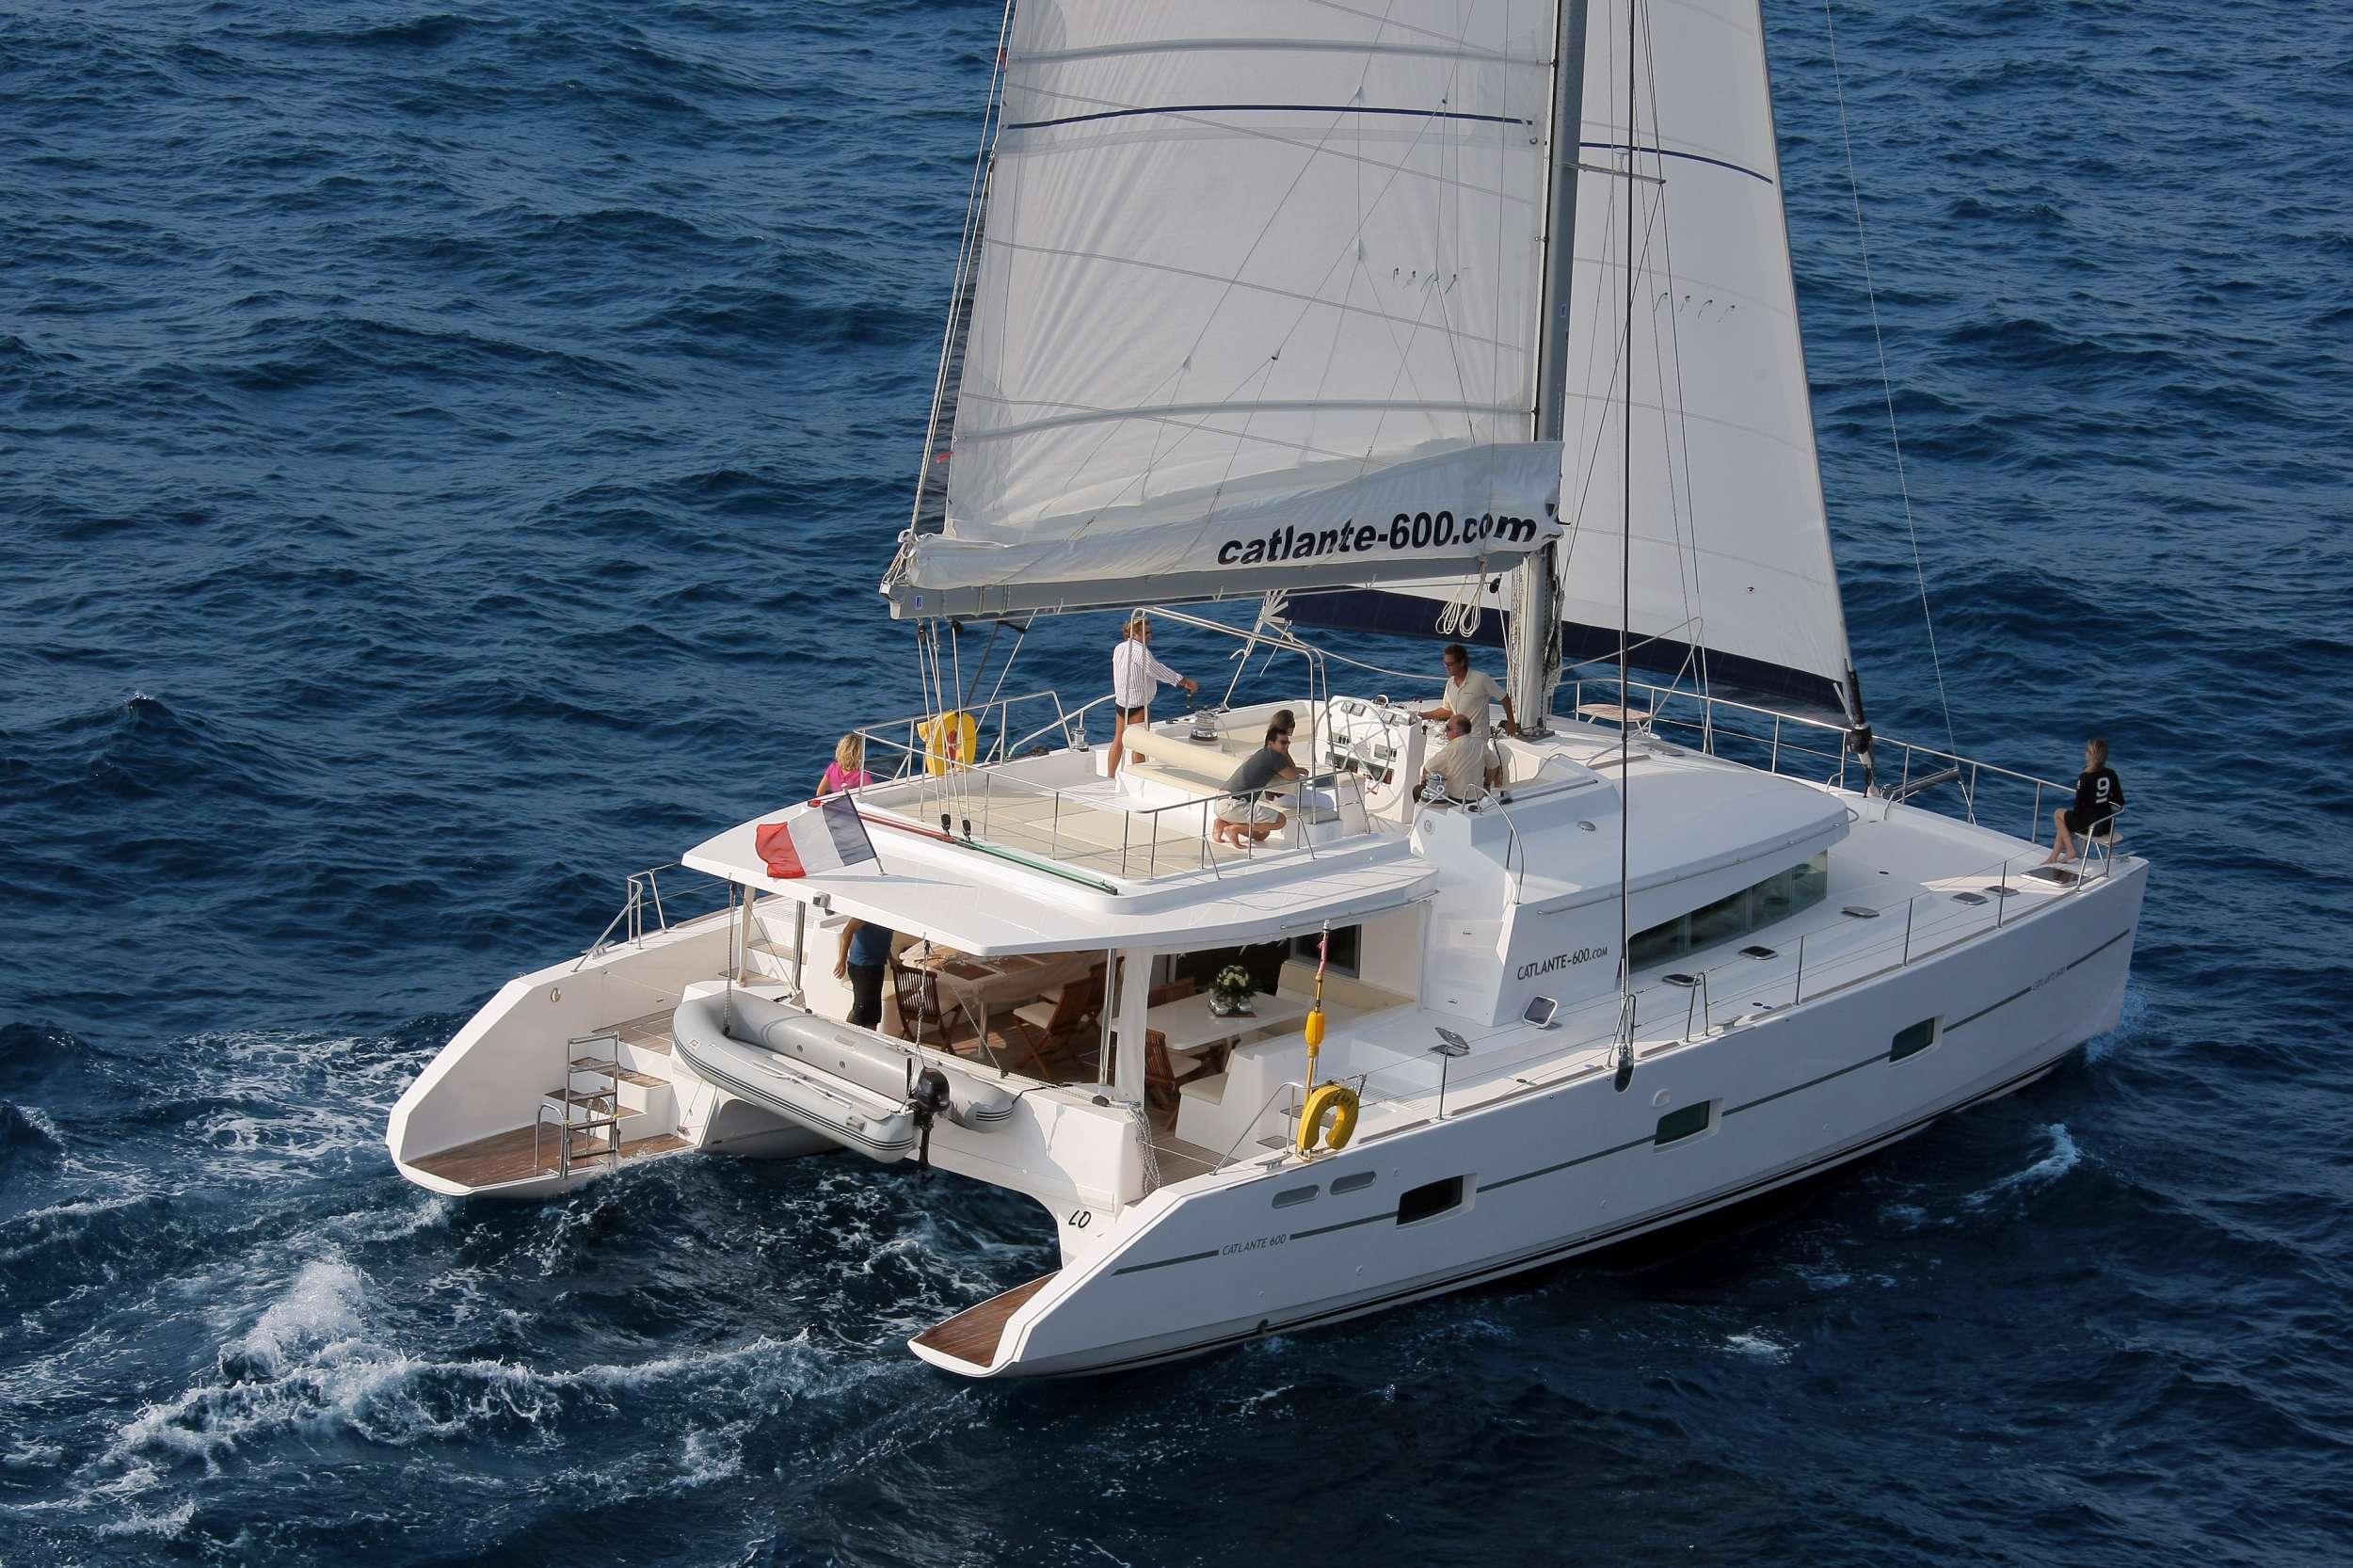 Dream 60 - Littr&eacute; &amp; Tauceti - Yacht Charter Langkawi & Boat hire in W. Med -Naples/Sicily, W. Med - Spain/Balearics, Croatia Bahamas, Indian Ocean and SE Asia 5